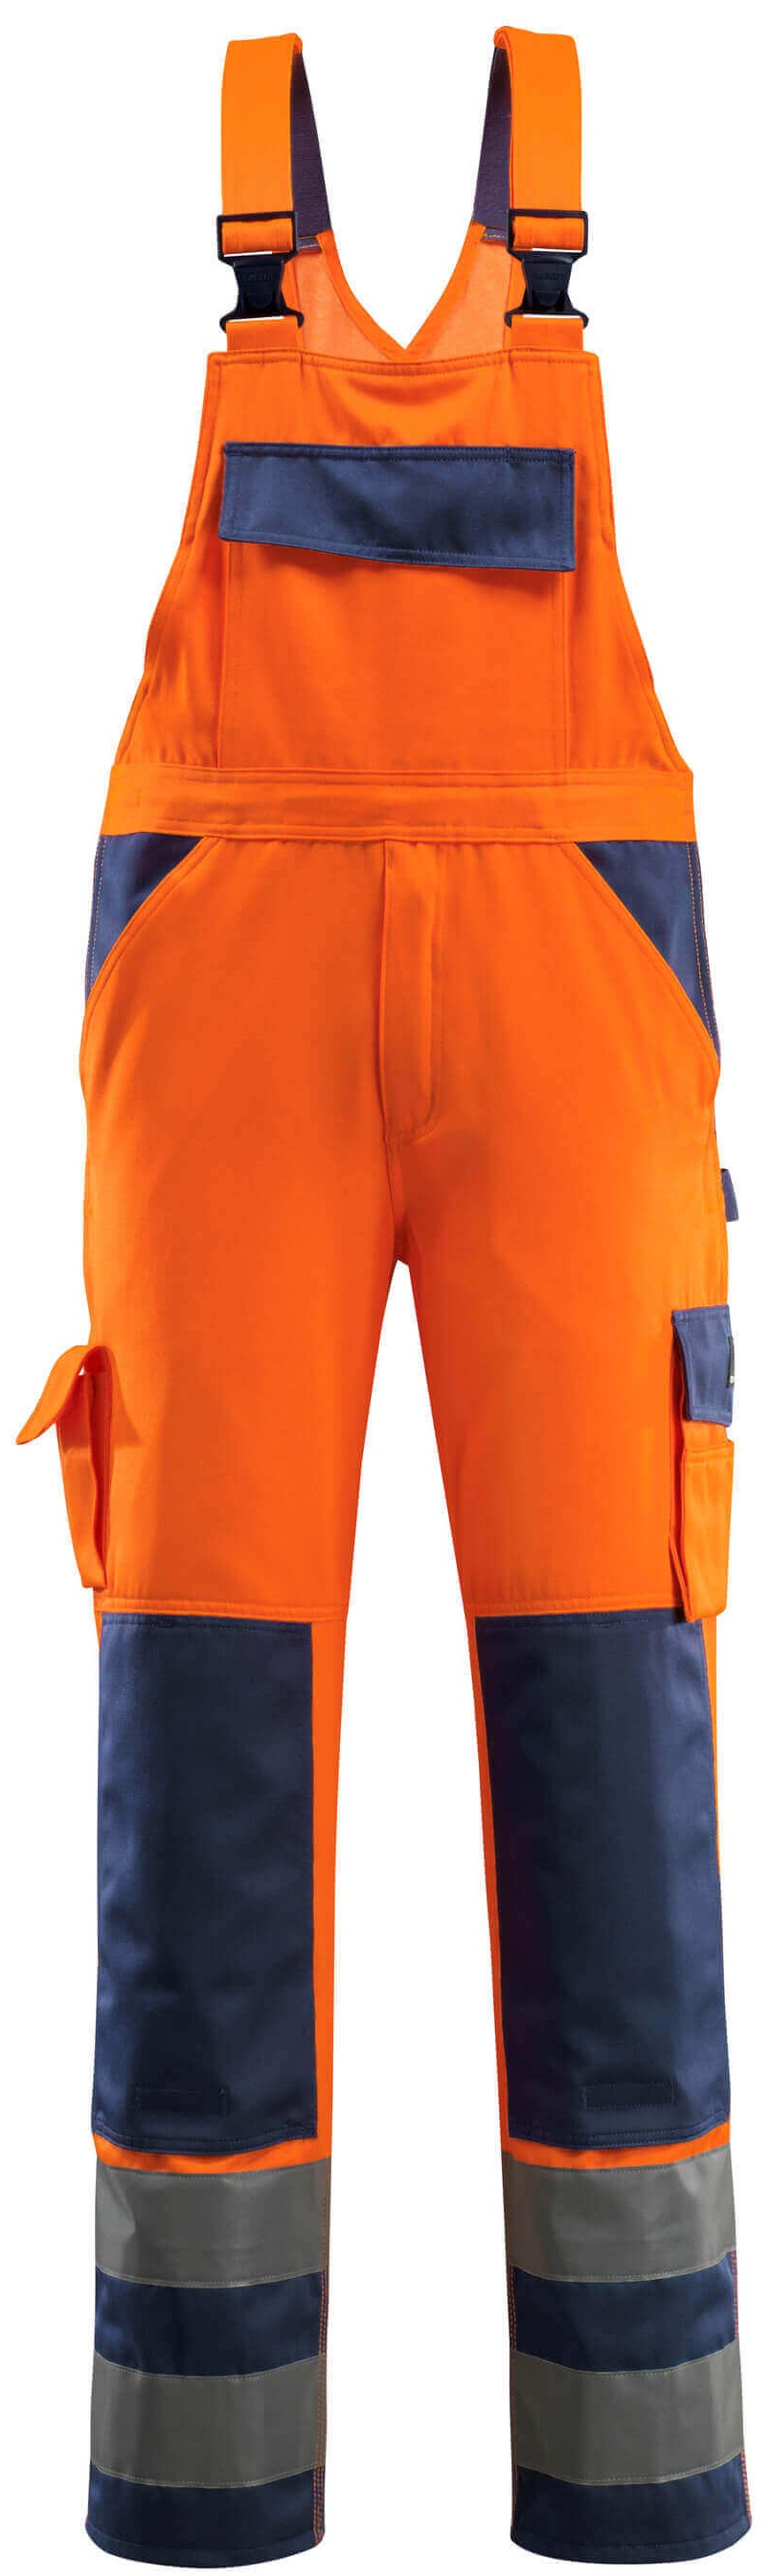 MASCOT-Warnschutz, Warn-Latzhose, Barras, 82 cm, 290 g/m², orange/marine
